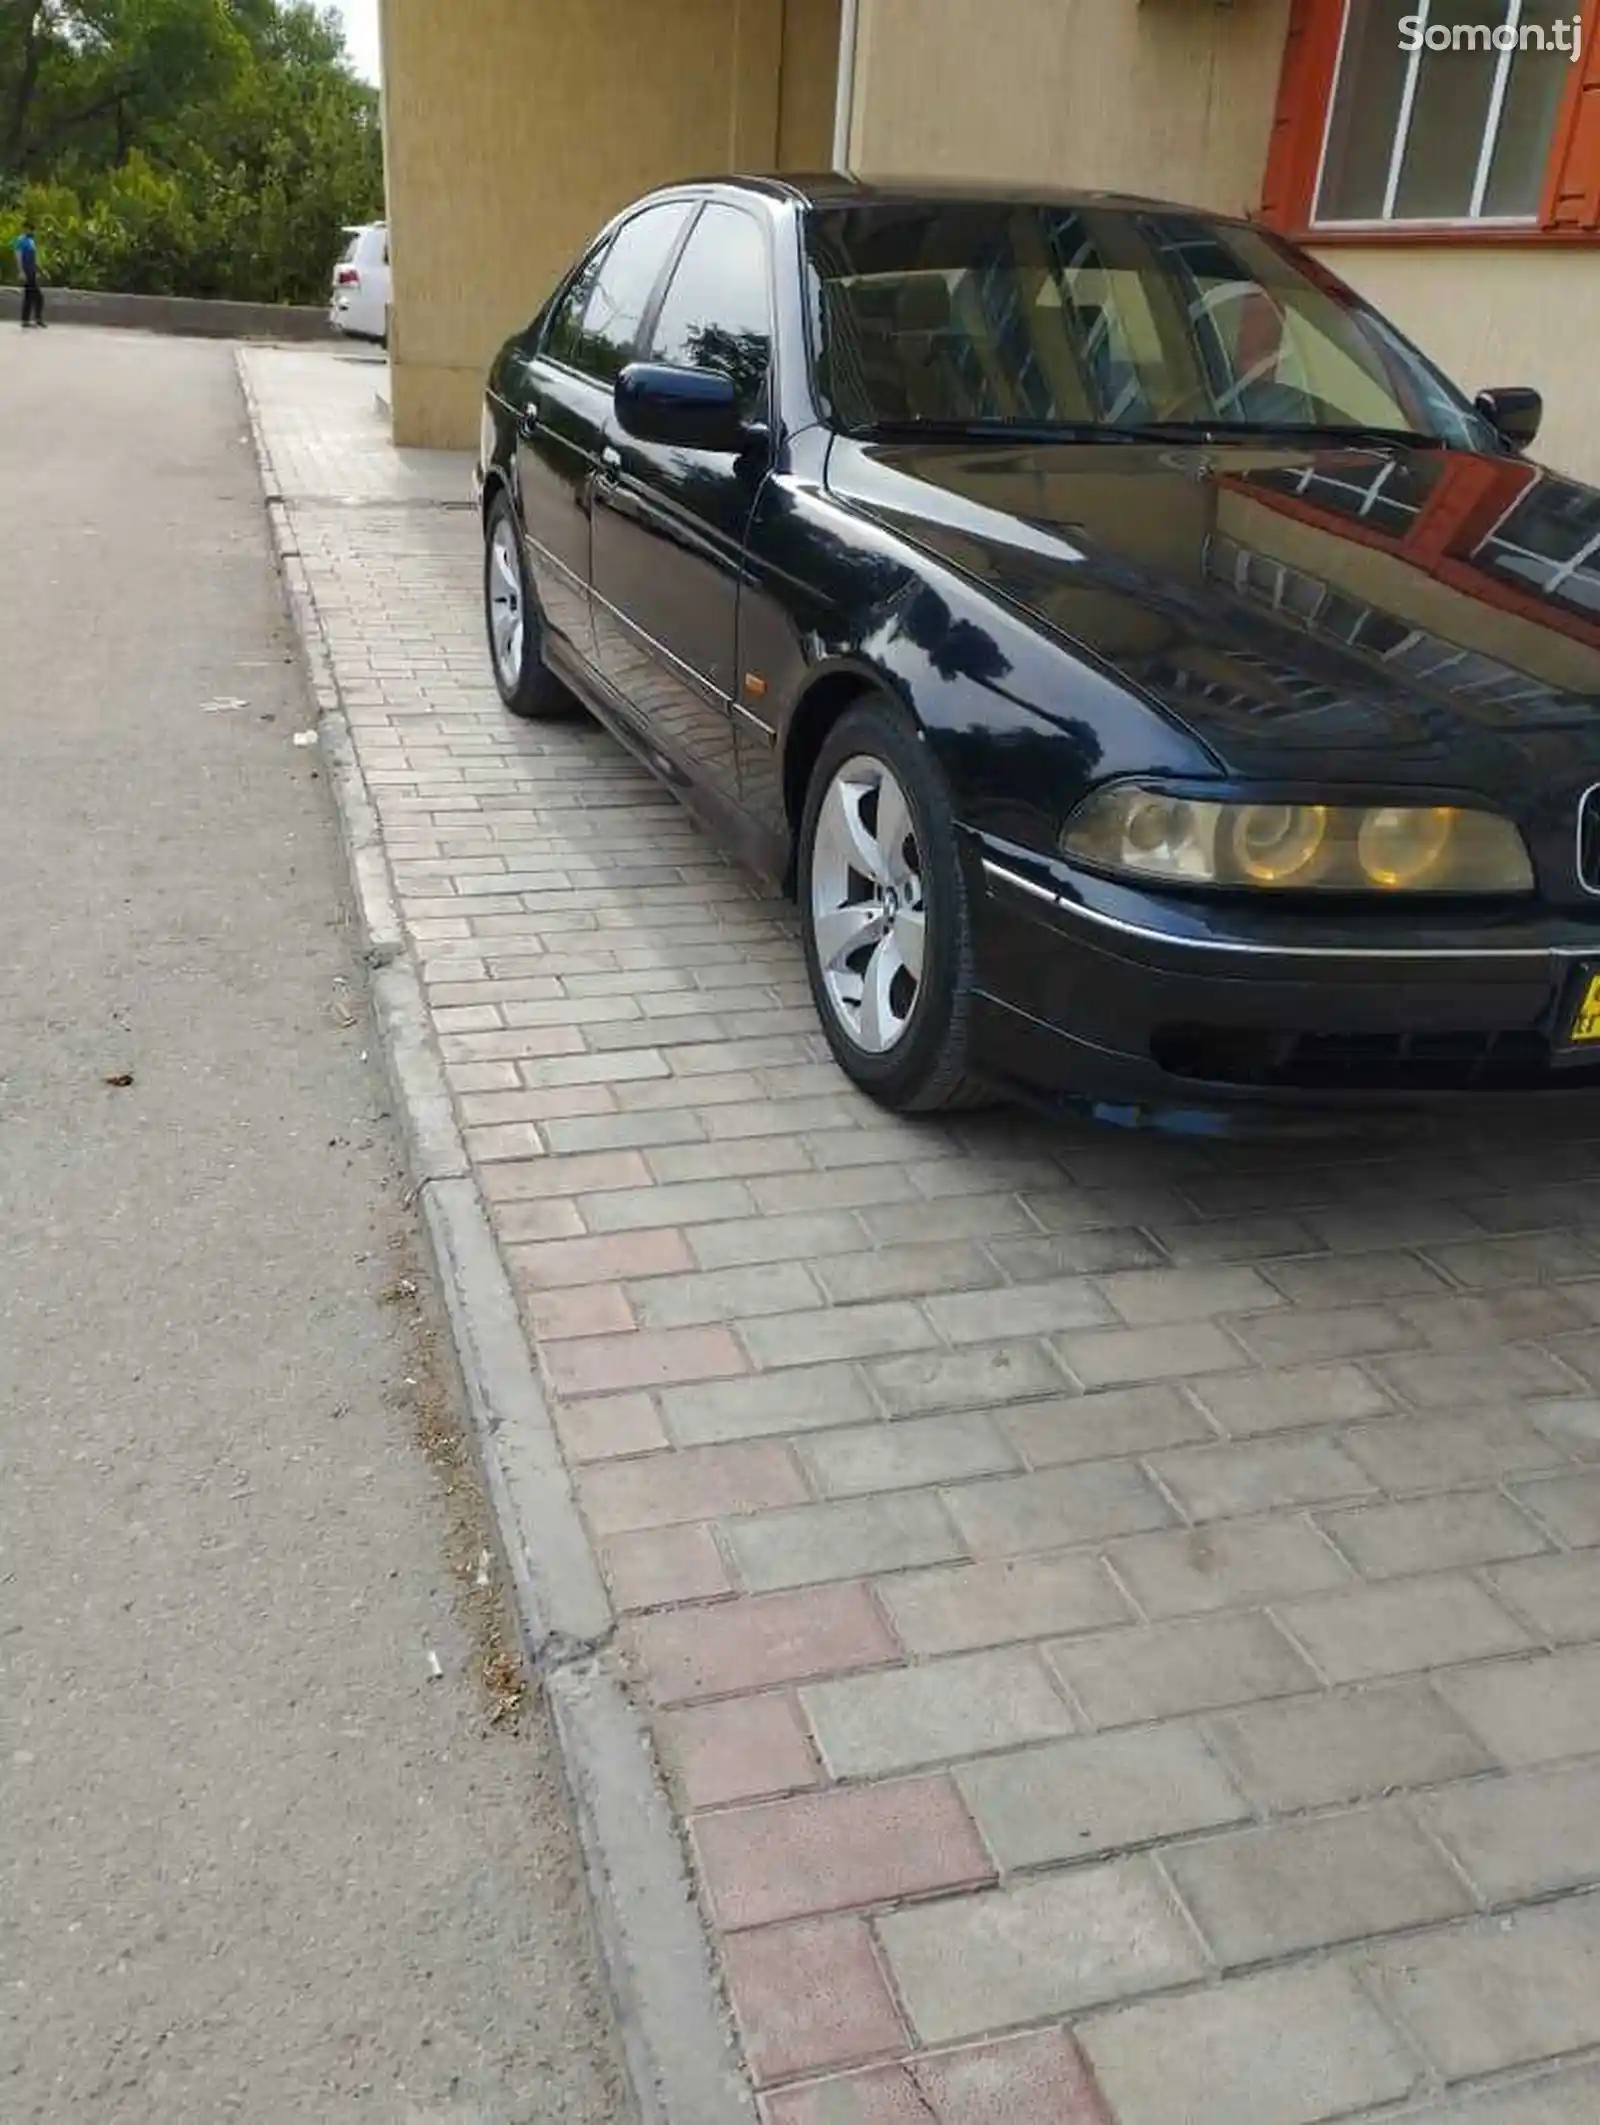 BMW 5 series, 1998-14